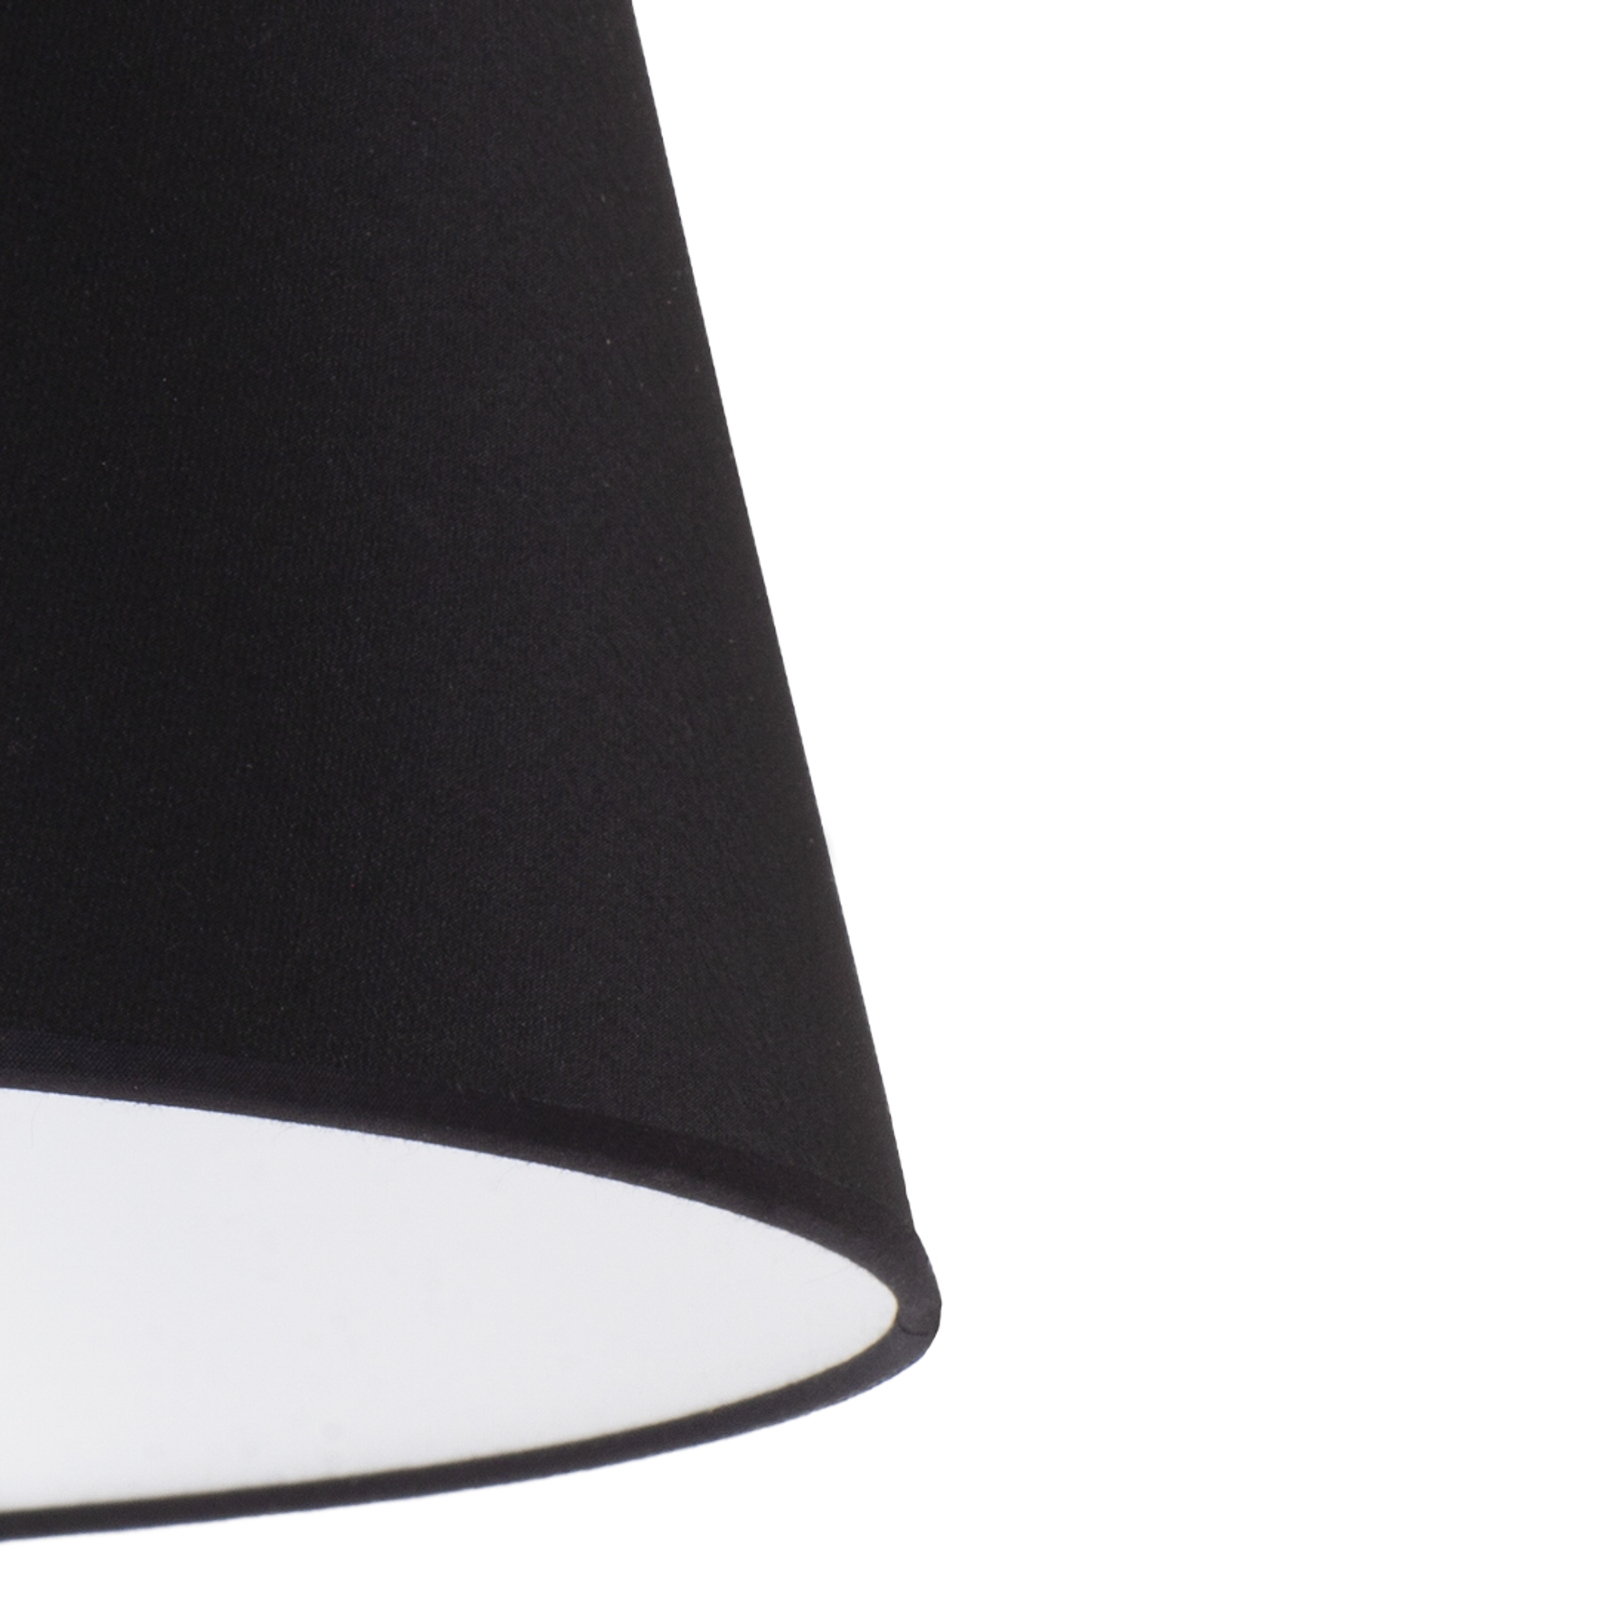 Cone lampshade height 25.5 cm, black chintz